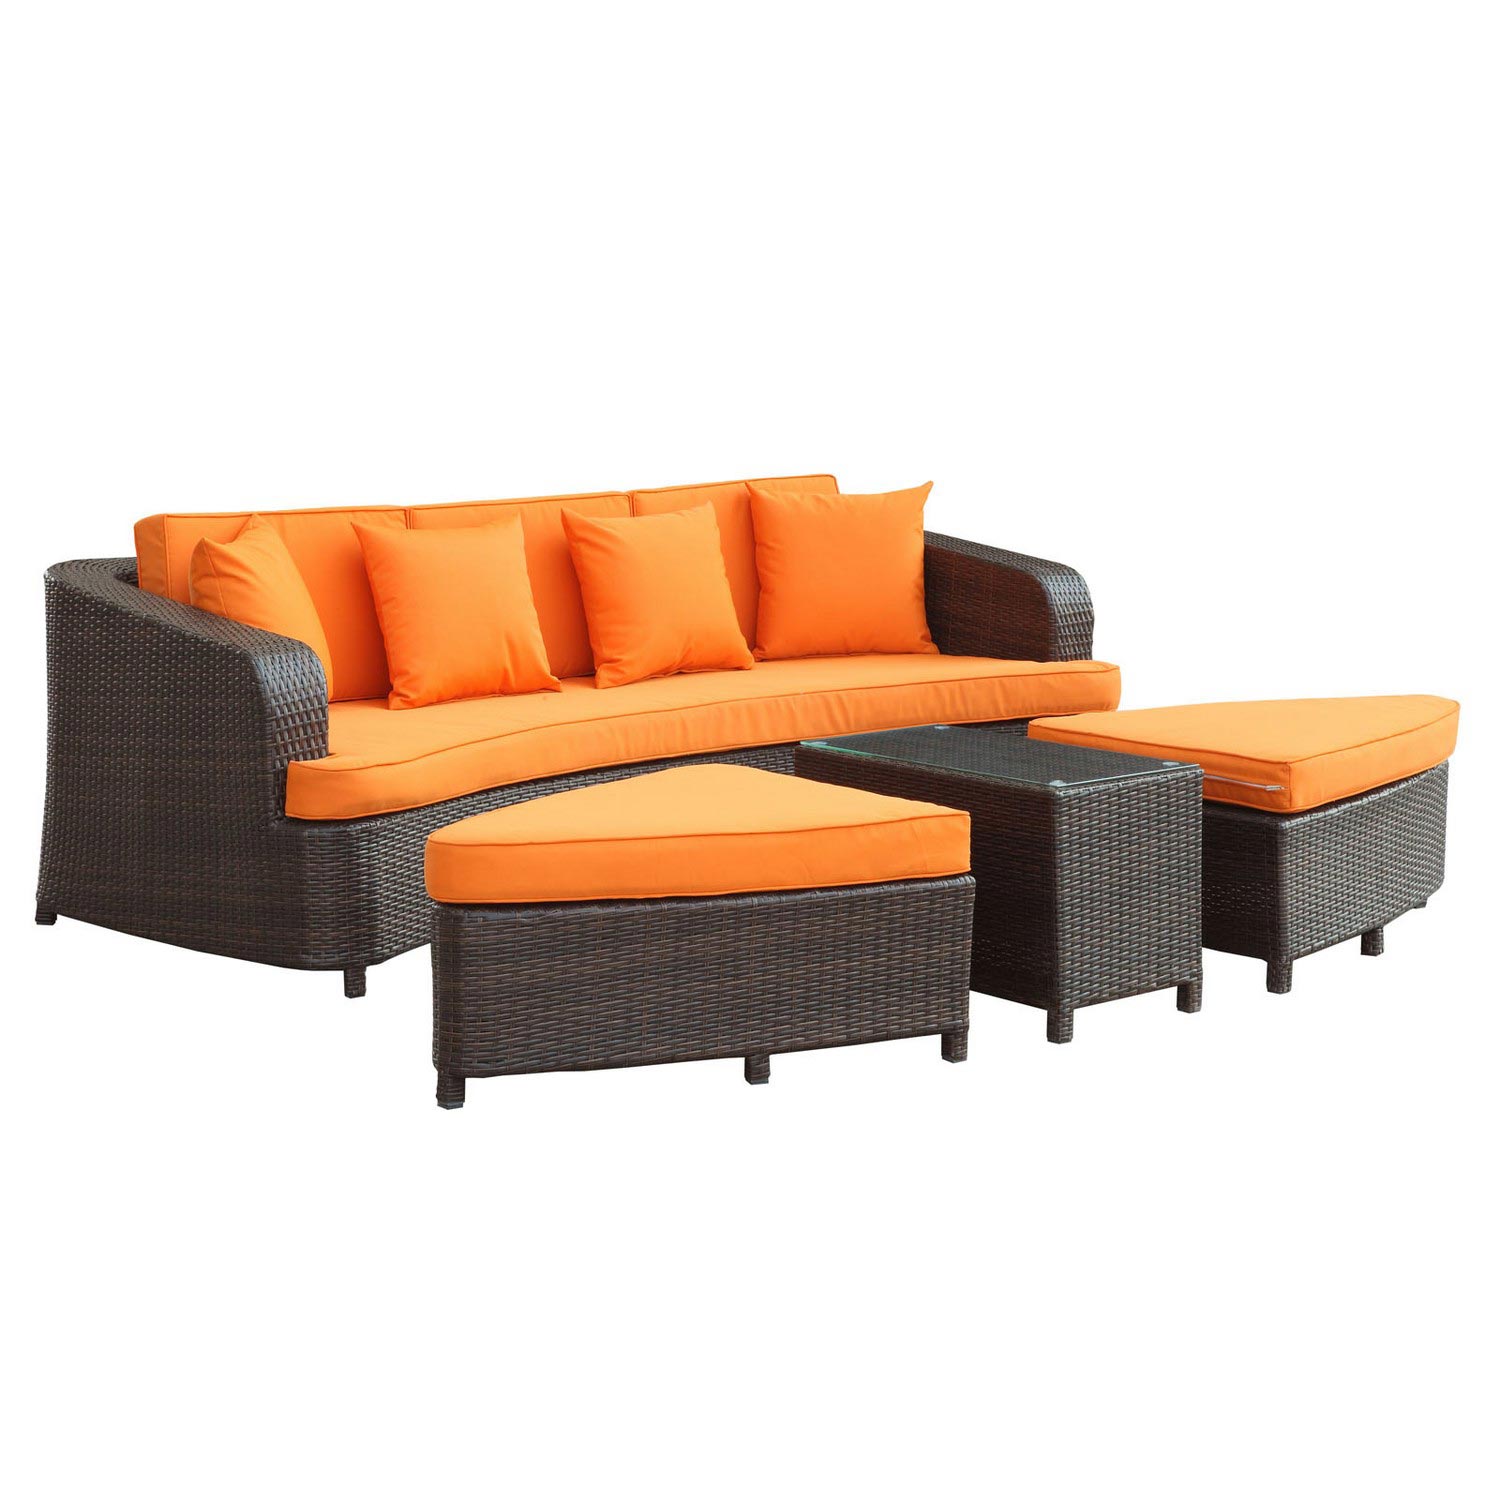 Modway Monterey 4 Piece Outdoor Patio Sofa Set - Brown/Orange